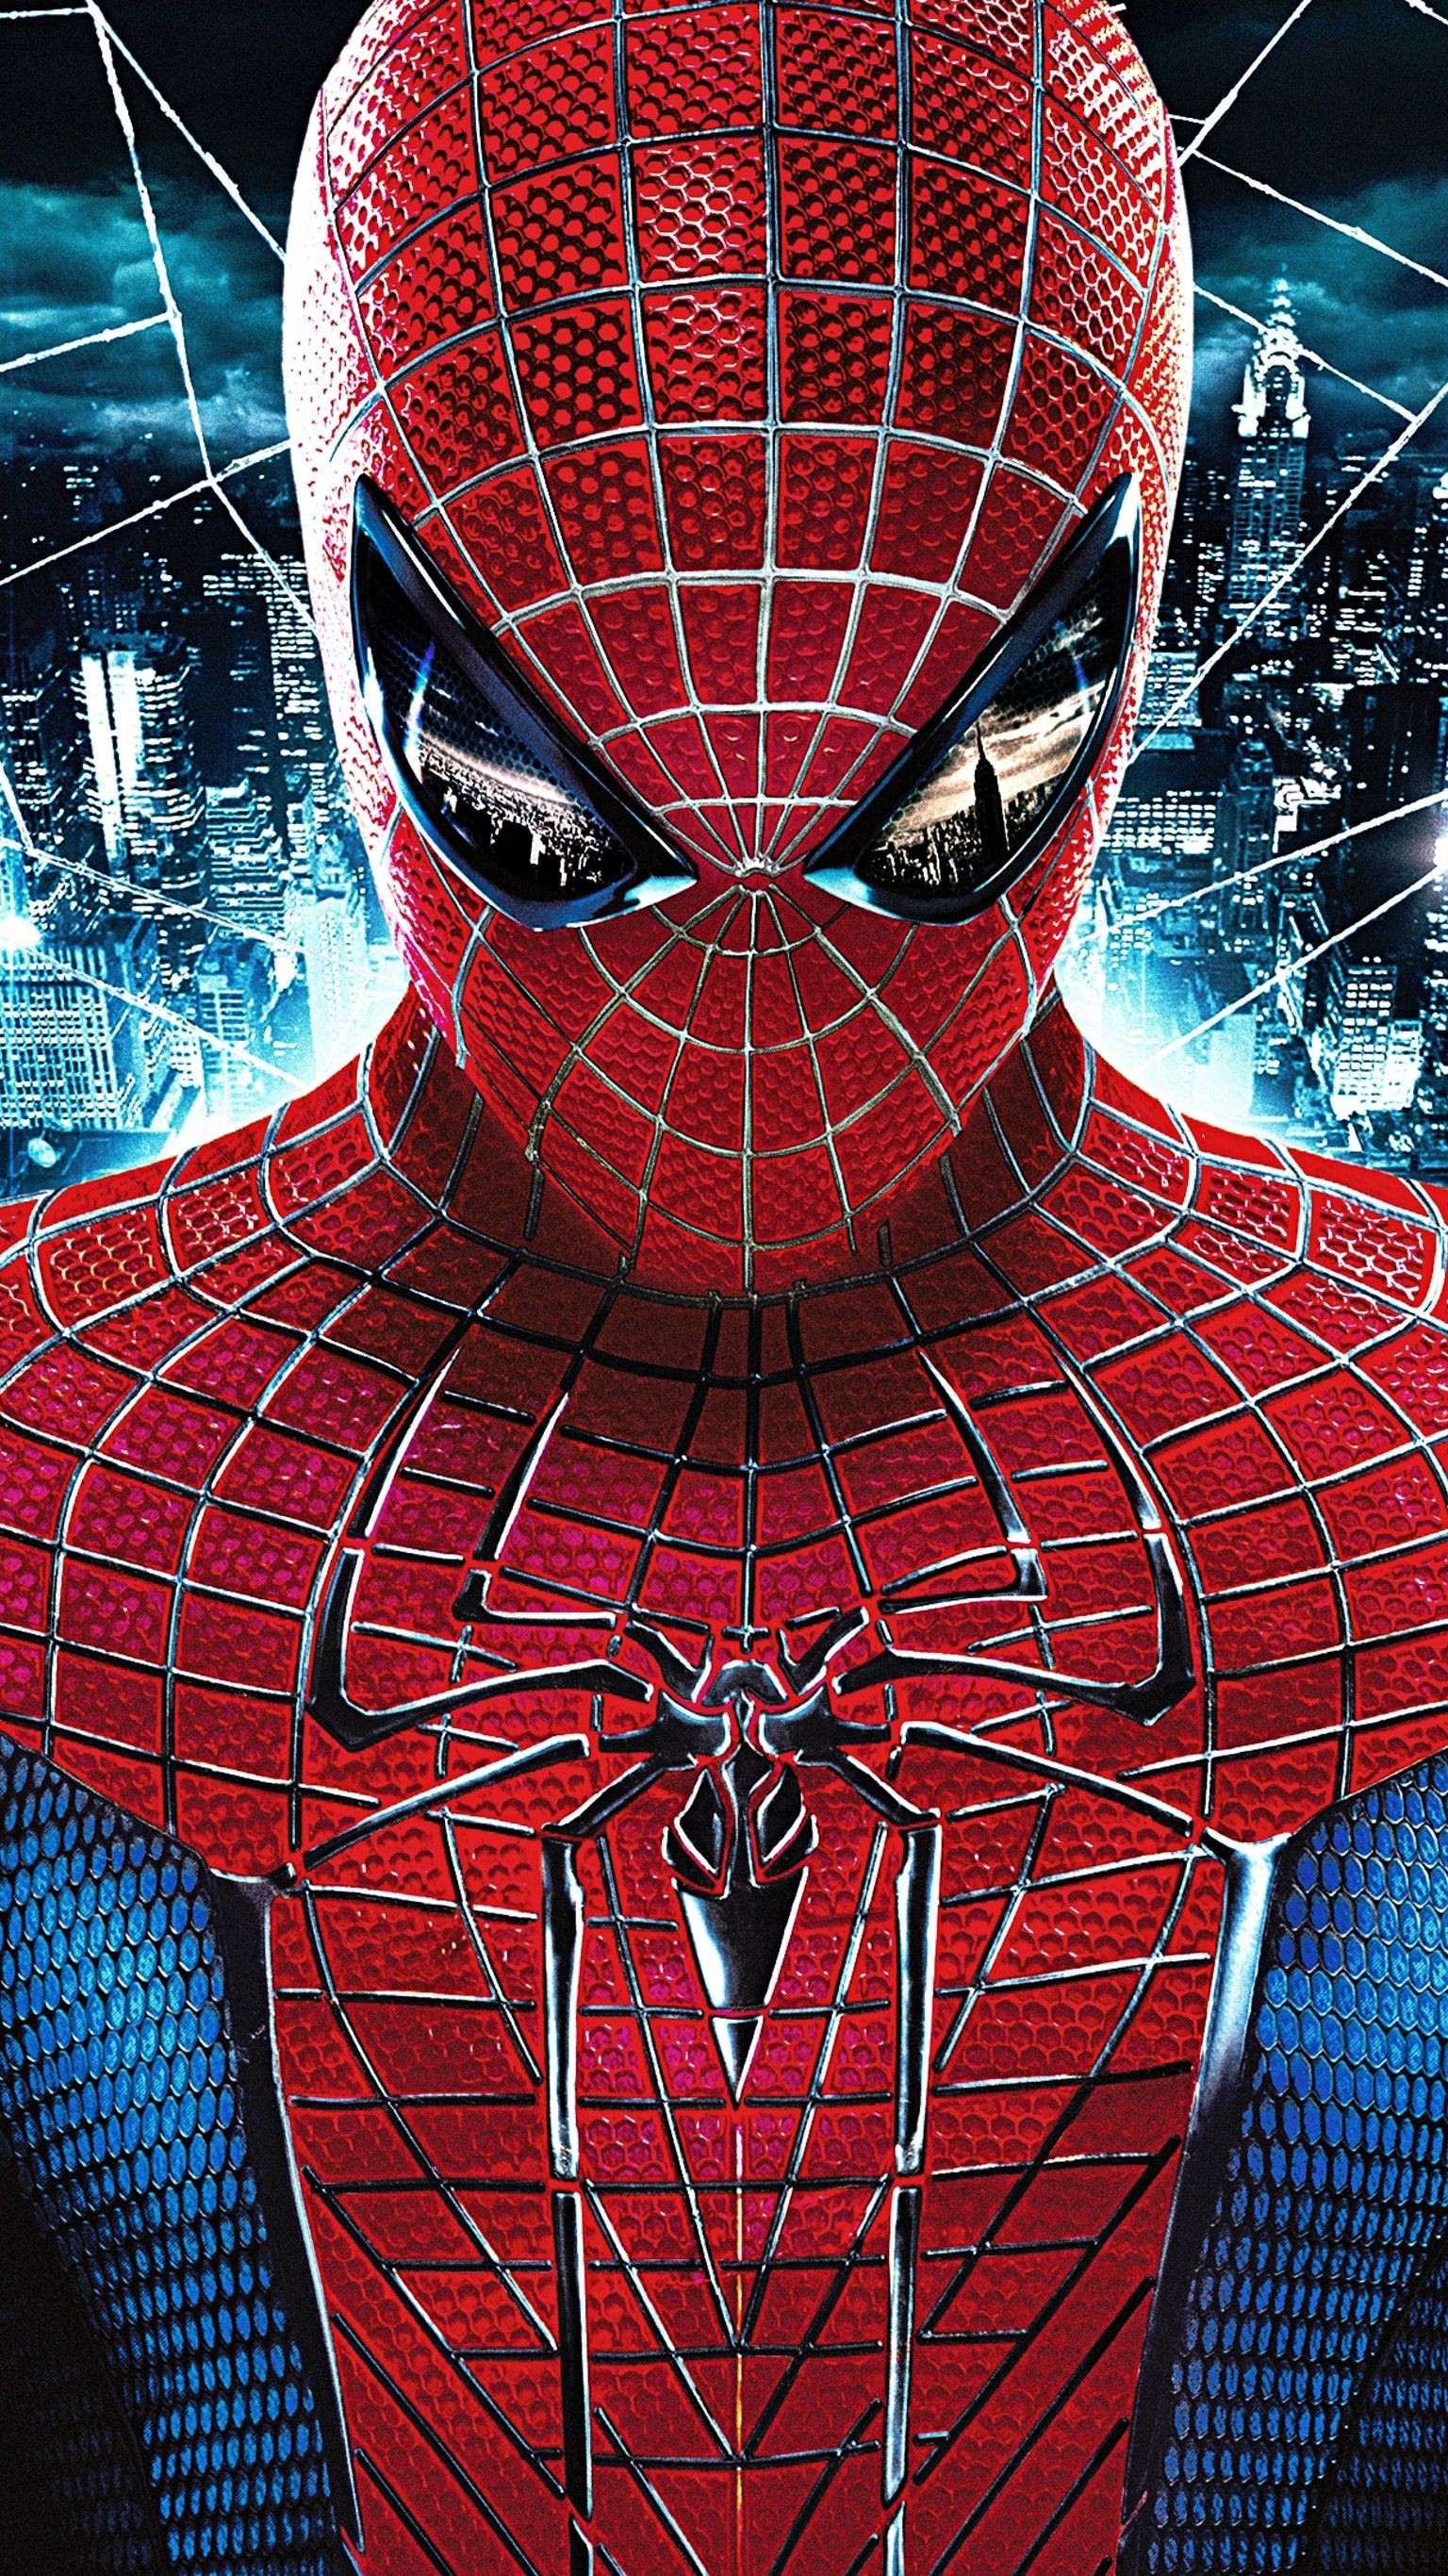 The Amazing Spider Man Phone Wallpaper